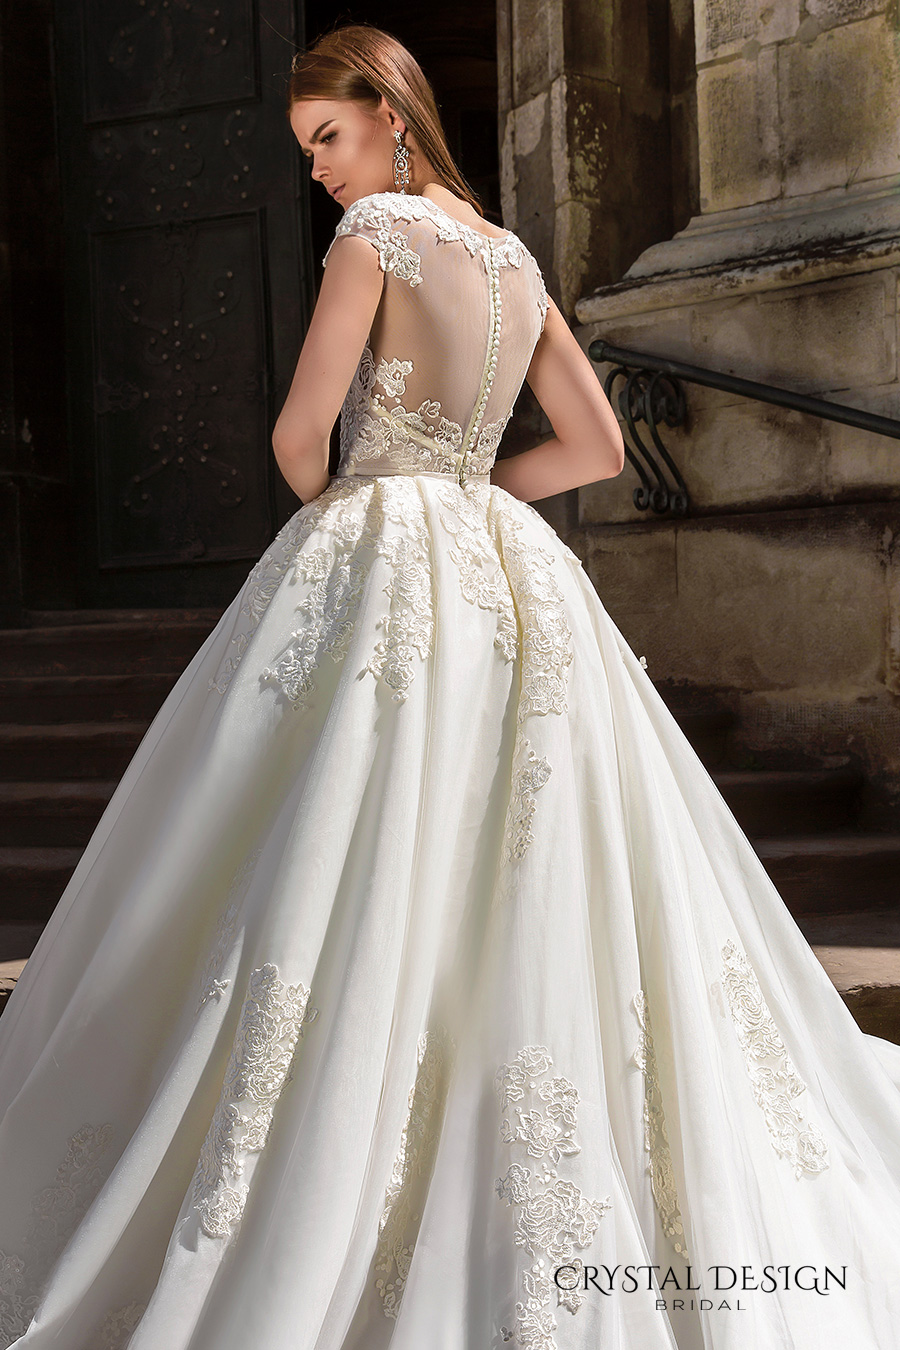 crystal design bridal 2016 cap sleeves jewel neckline heavily embellished bodice princess ball gown wedding dress monarch train (golden) zbv